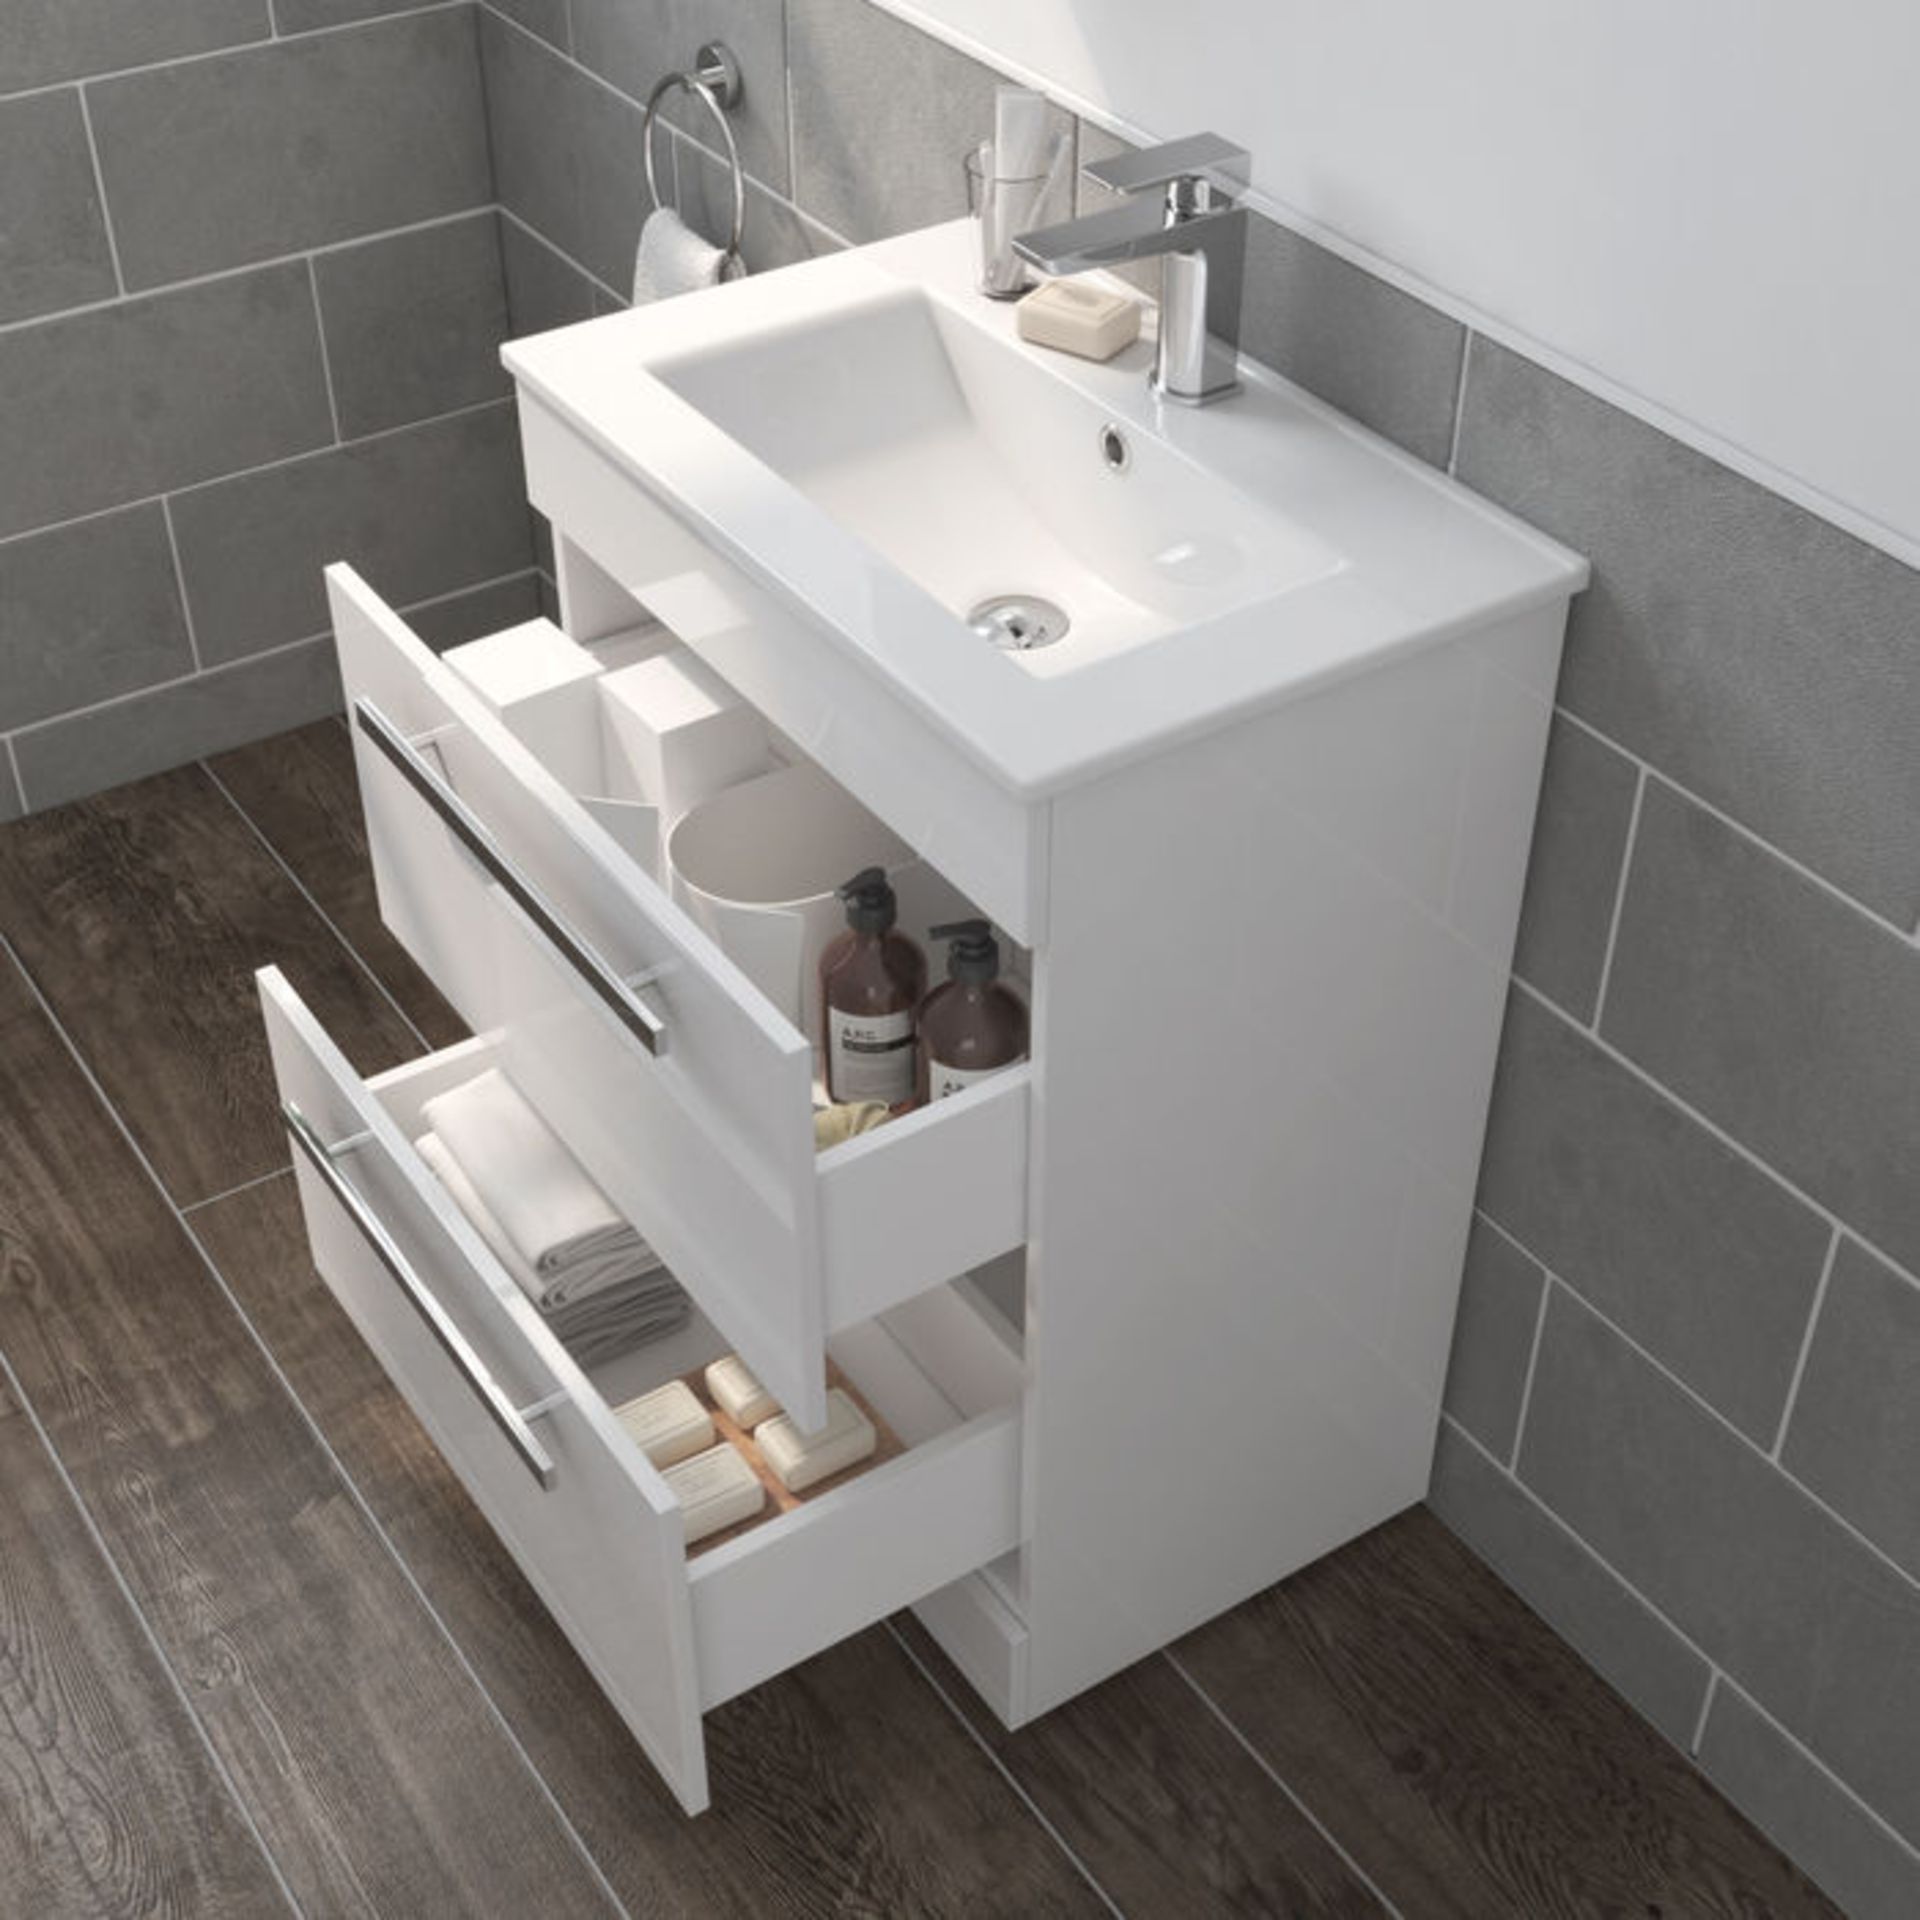 (JM31) 600mm Avon High Gloss White Double Drawer Basin Cabinet - Floor Standing. RRP £499.99. - Image 2 of 5